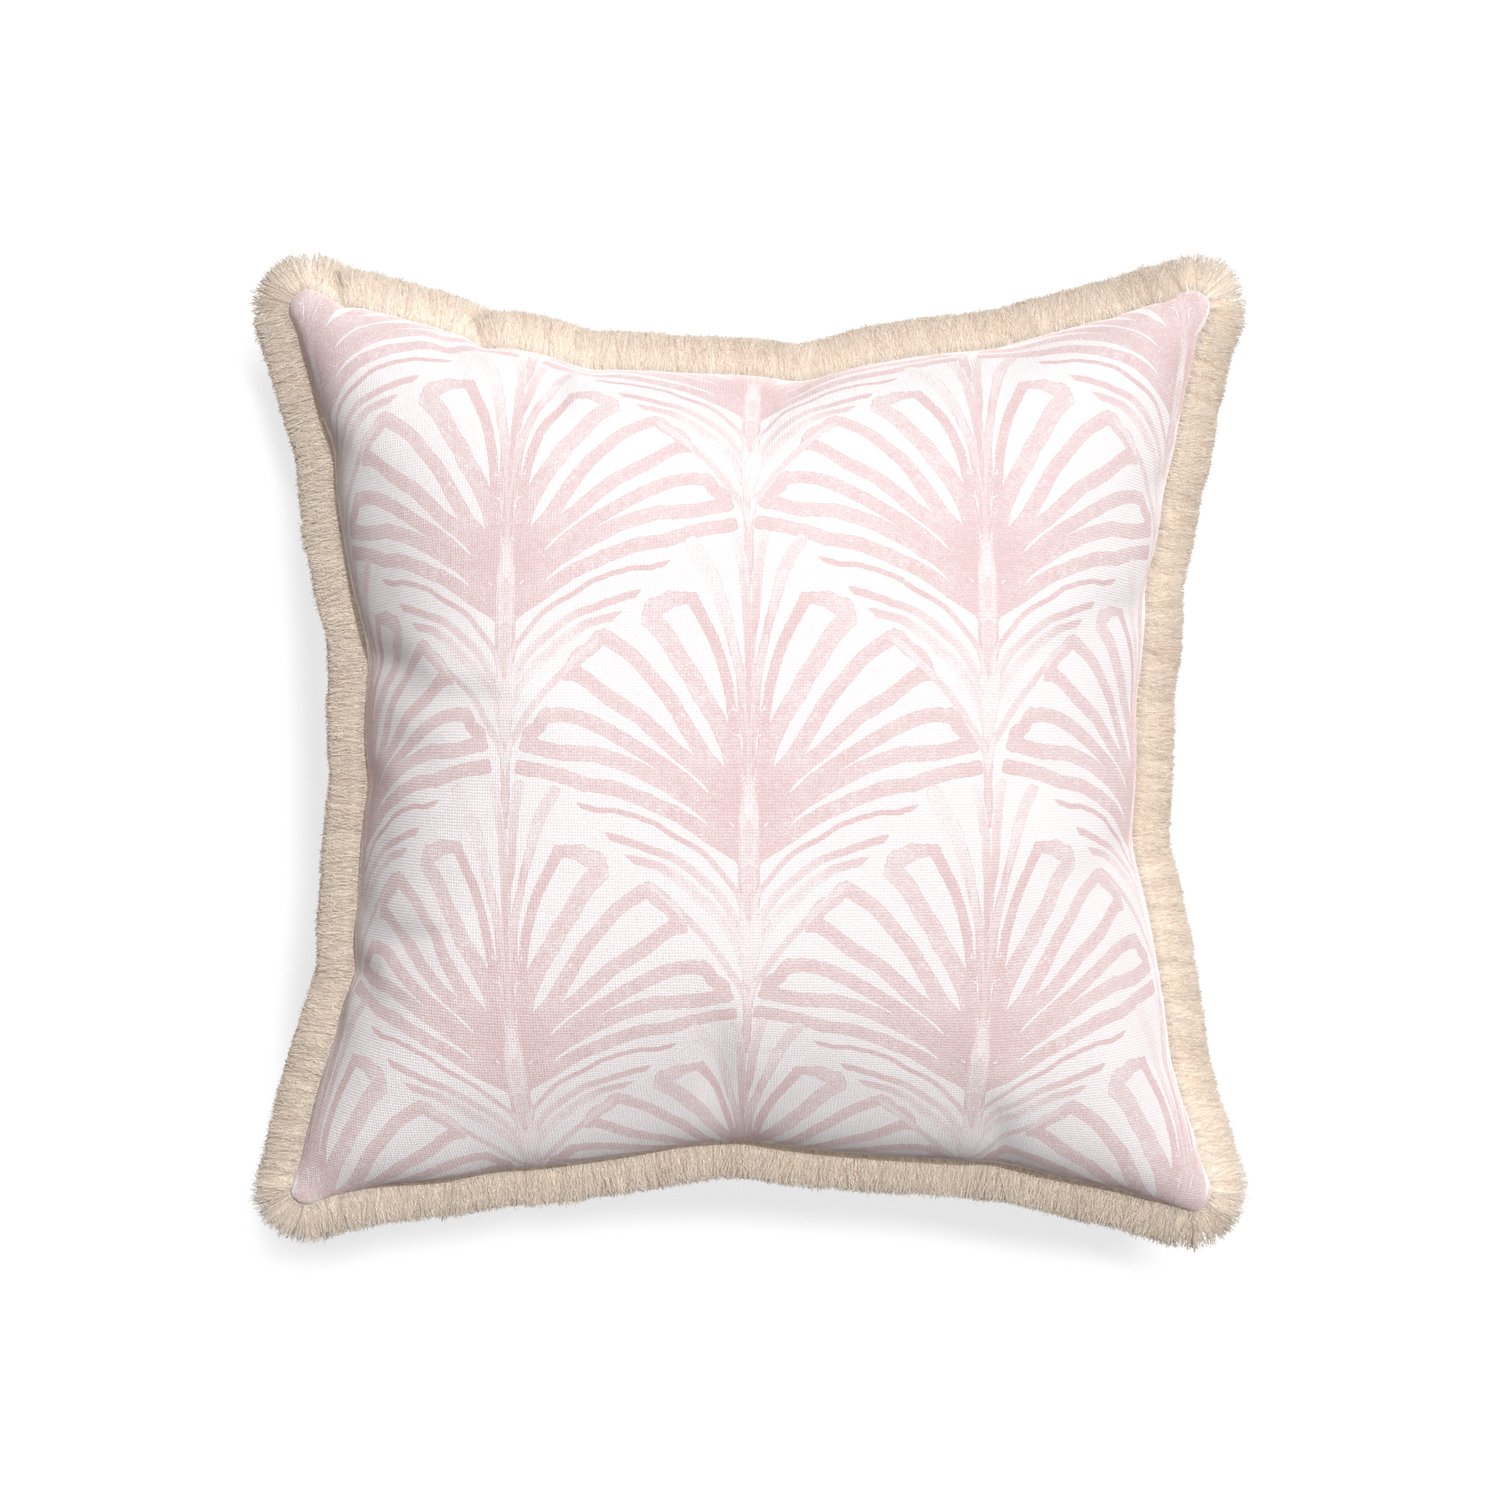 20-square suzy rose custom pillow with cream fringe on white background